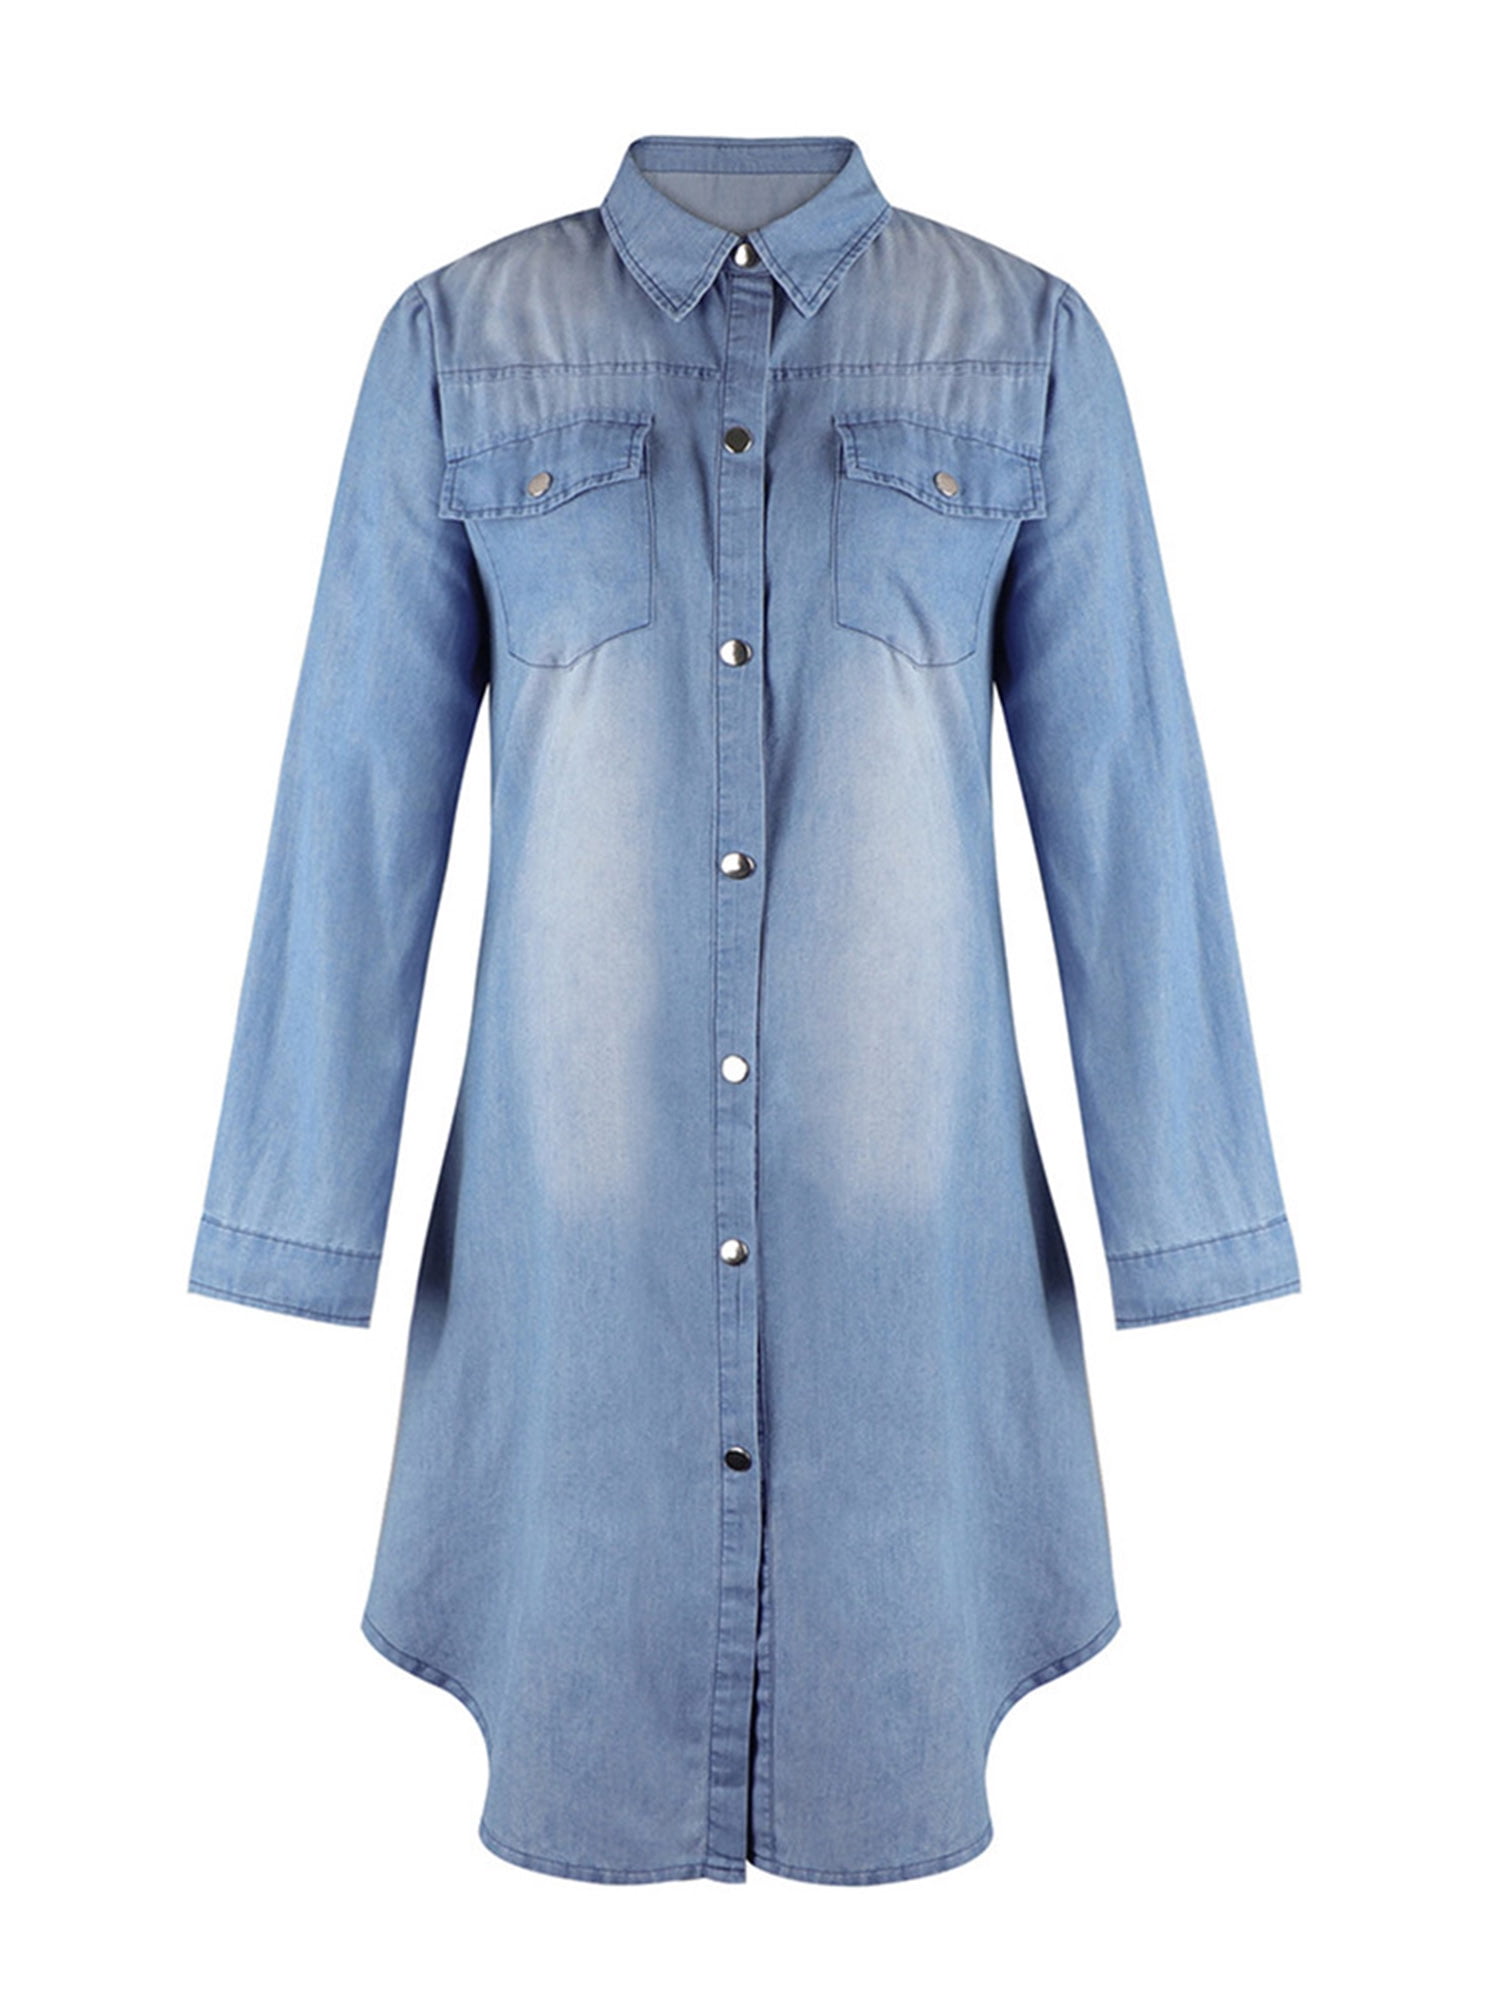 Women's Denim Shirt Dresses Long Sleeve Distressed Jean Dress Button Down Casual Tunic Top